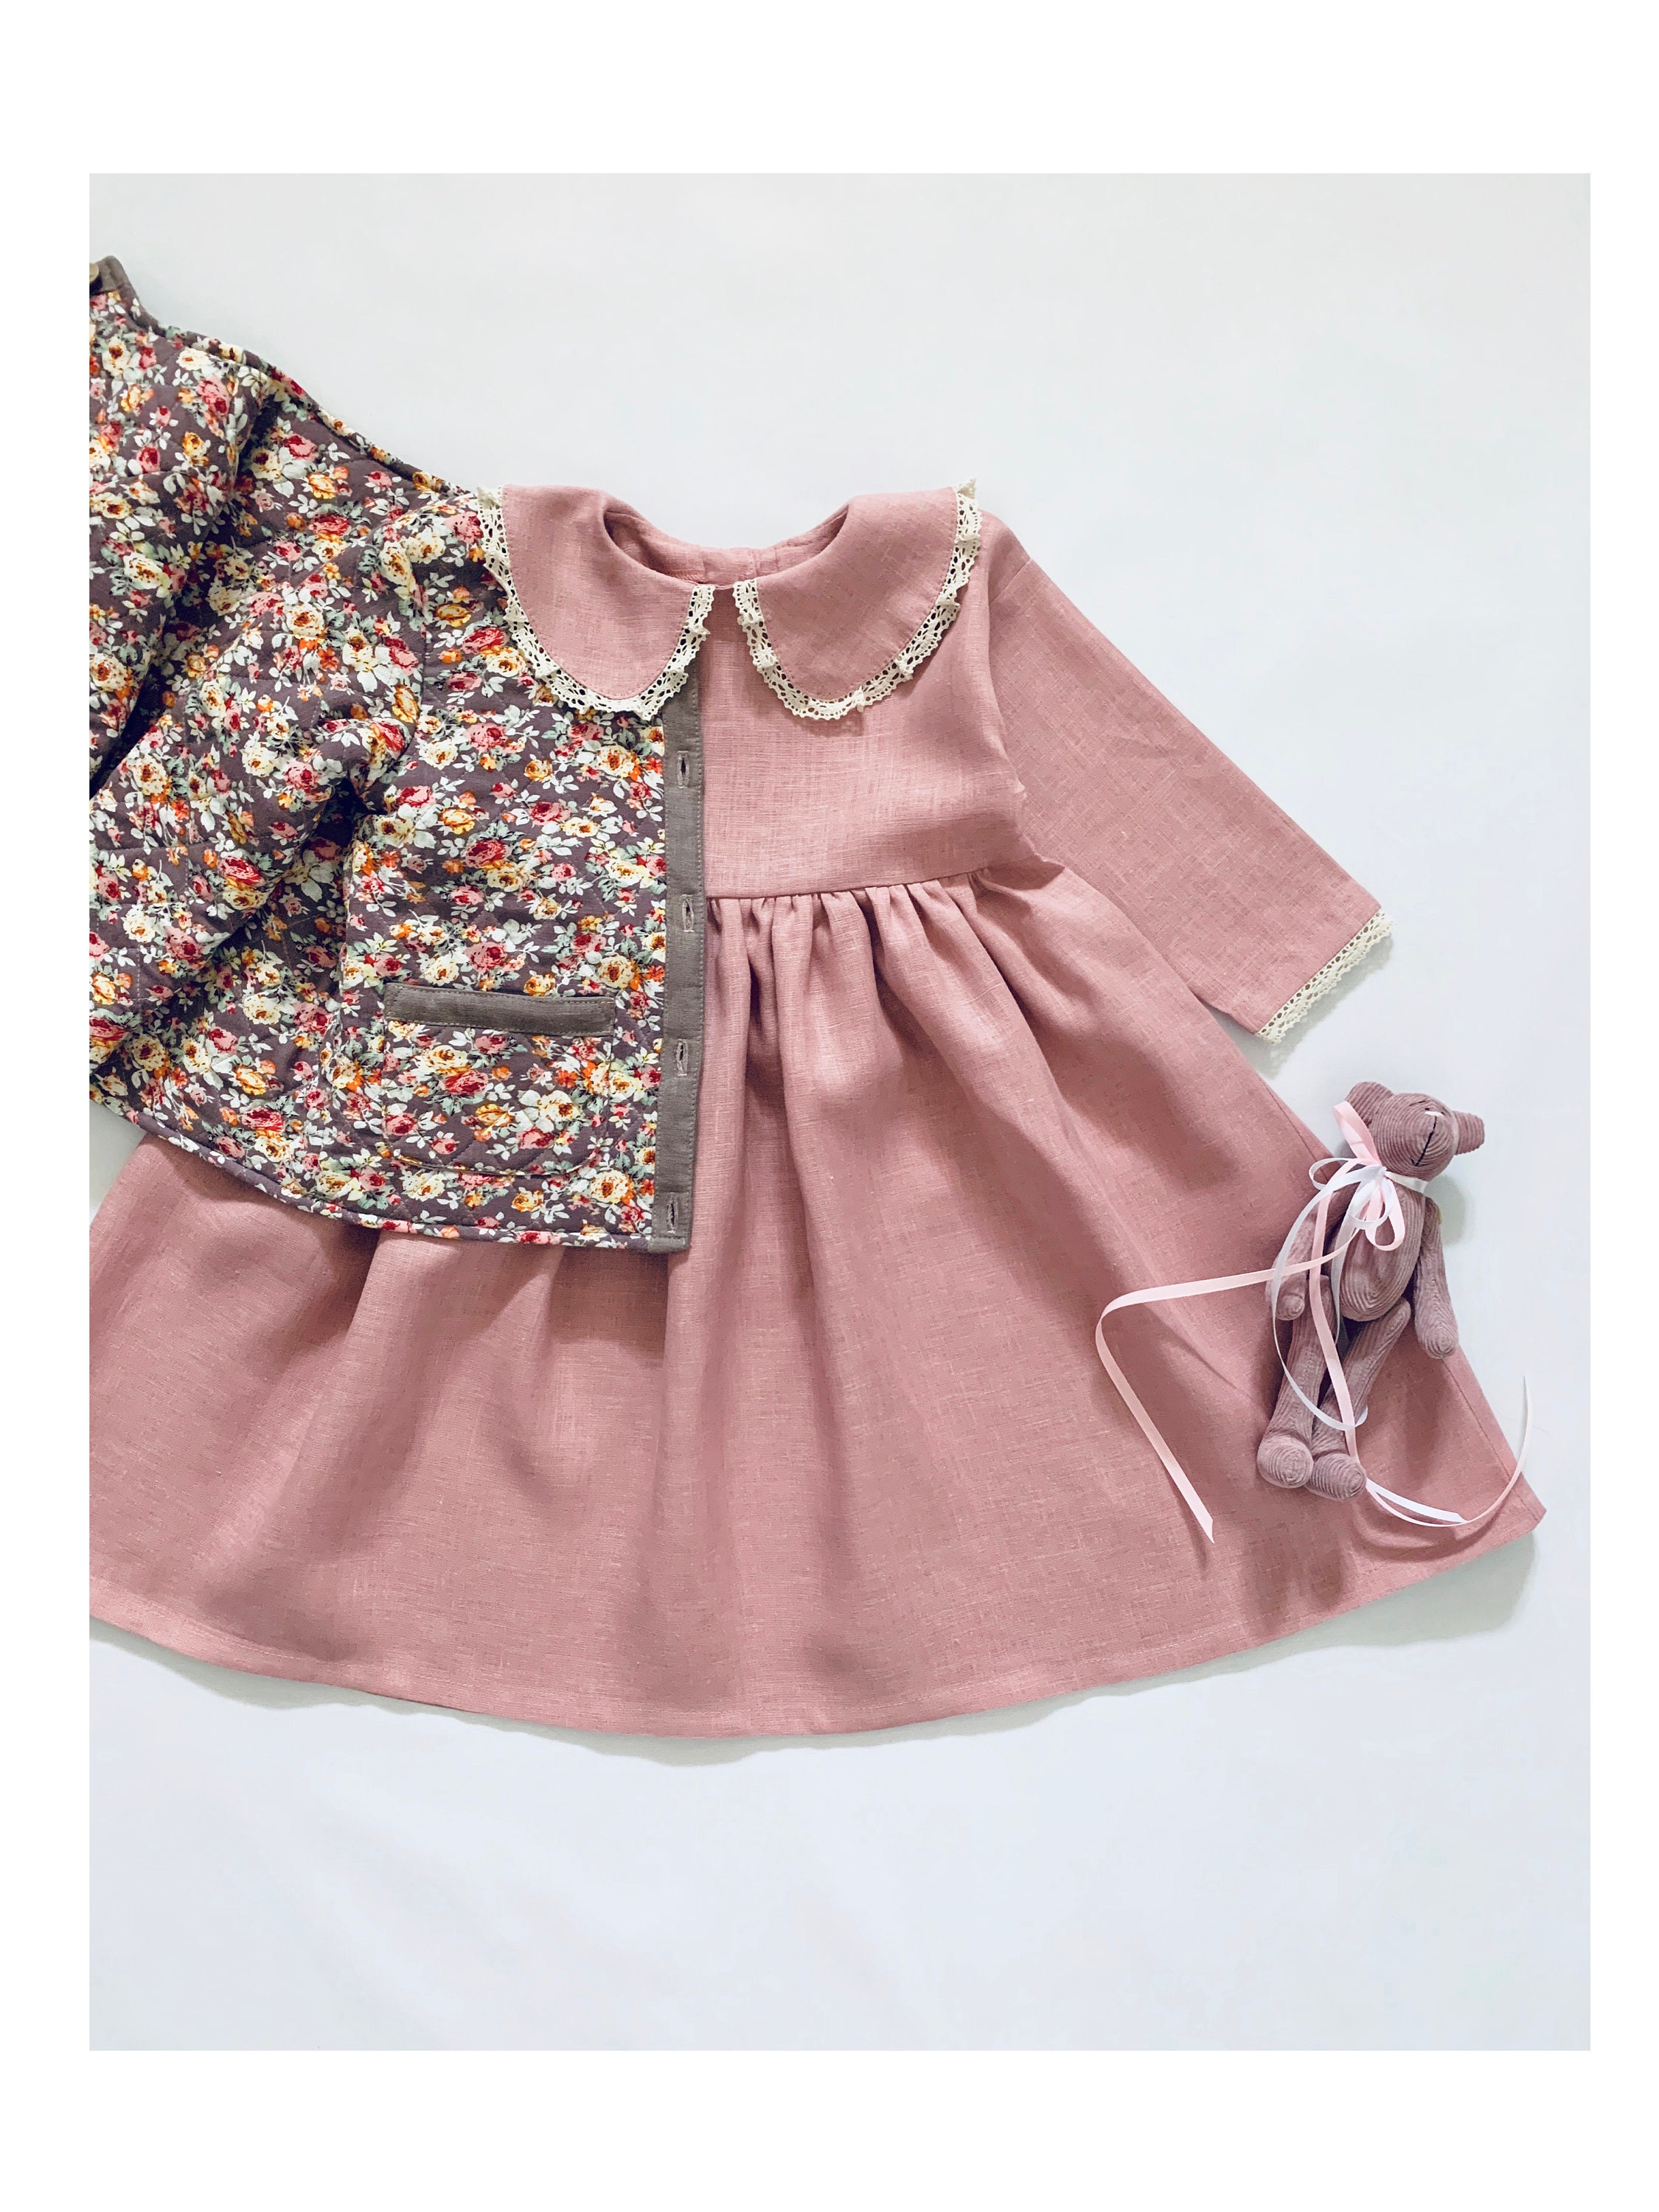 Linen Baby Coat With Pockets Organic Kids Cloth Autumn Coat | Etsy